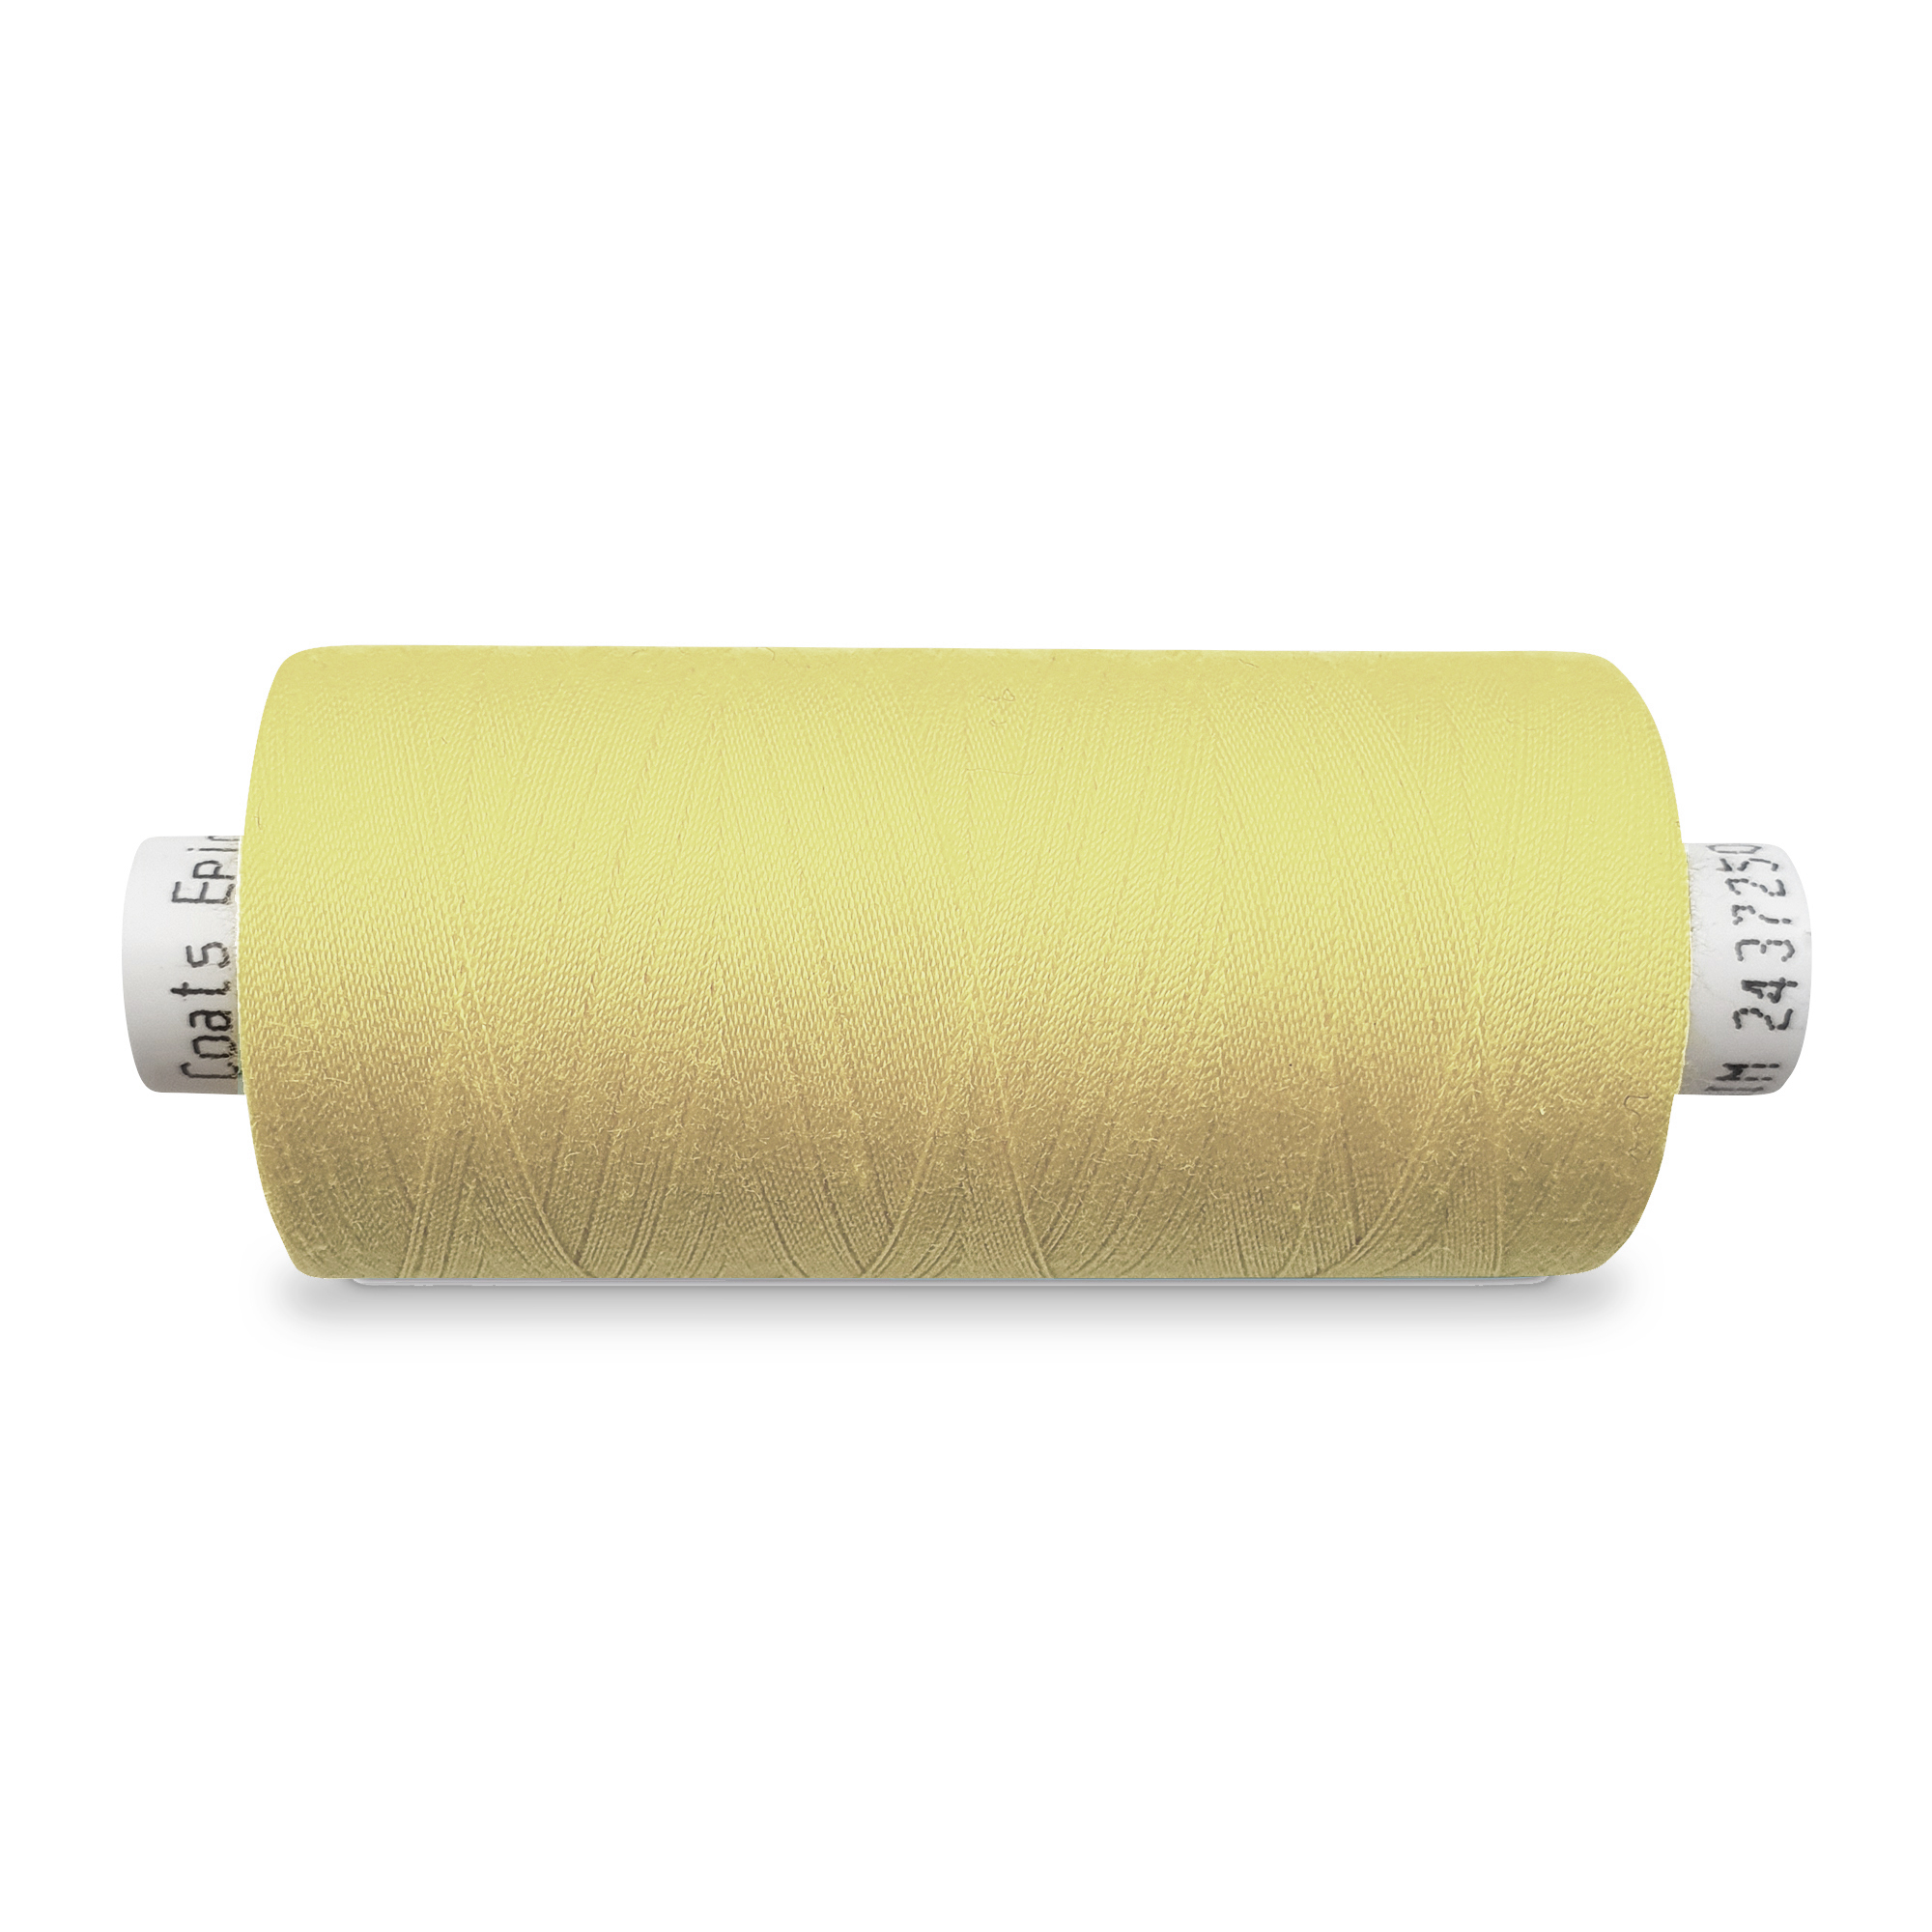 Sewing thread light yellow